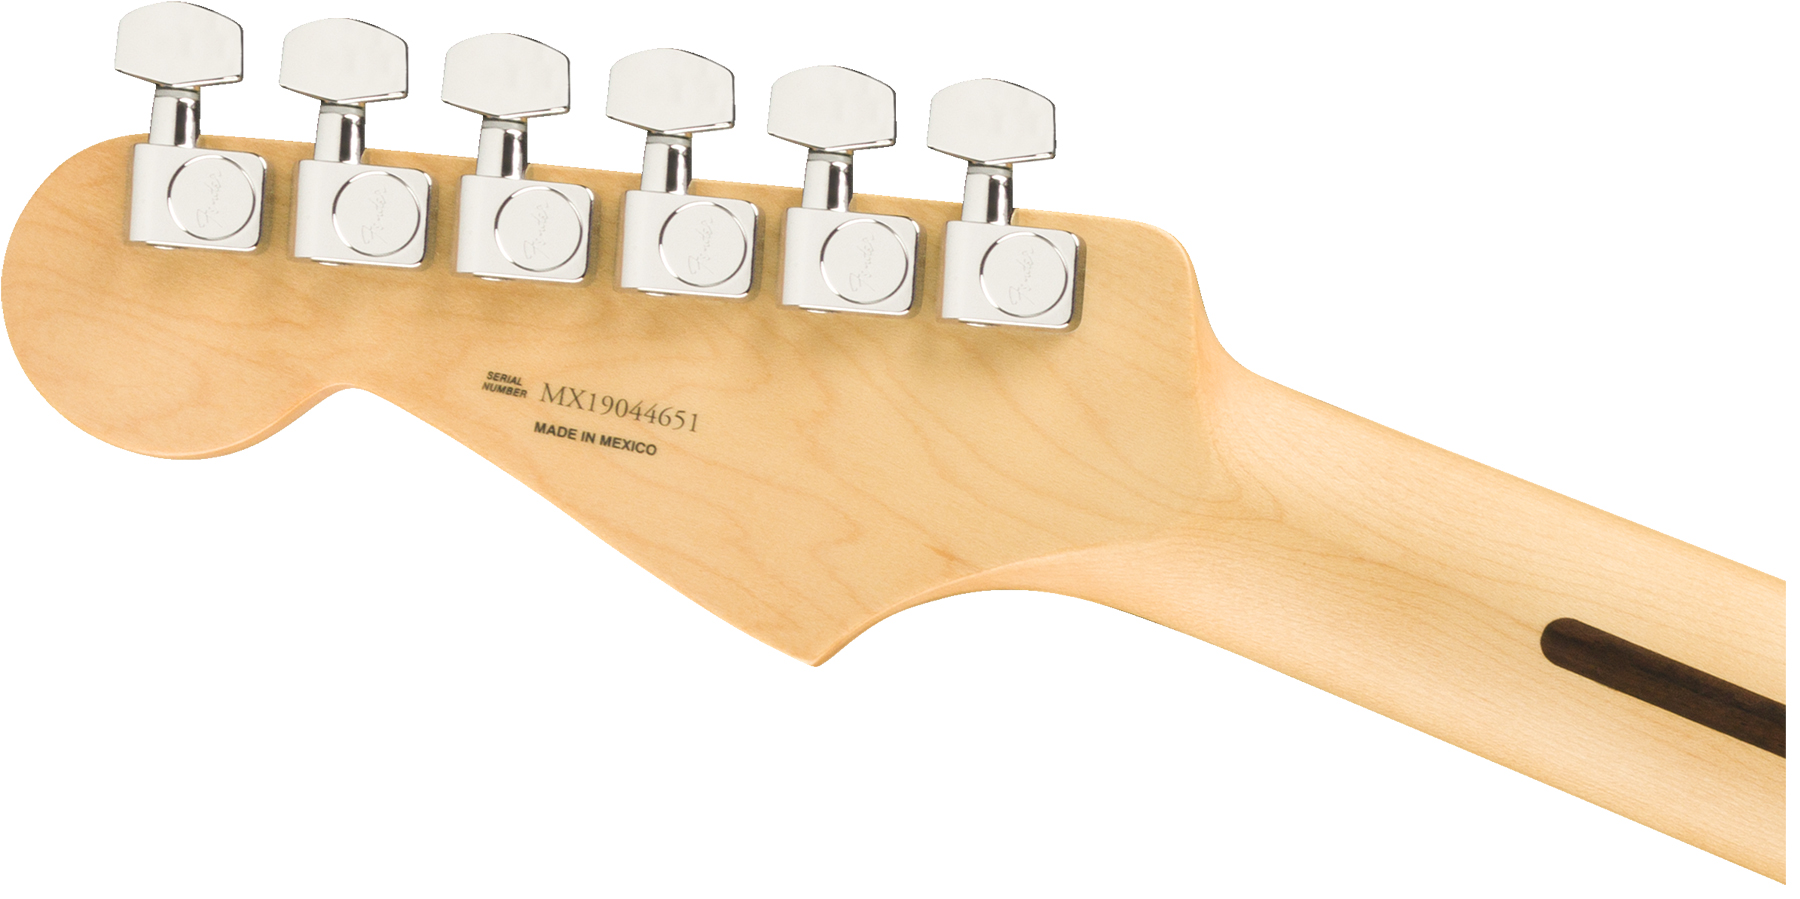 Fender Strat Player Mex Sss Mn - Capri Orange - Str shape electric guitar - Variation 3